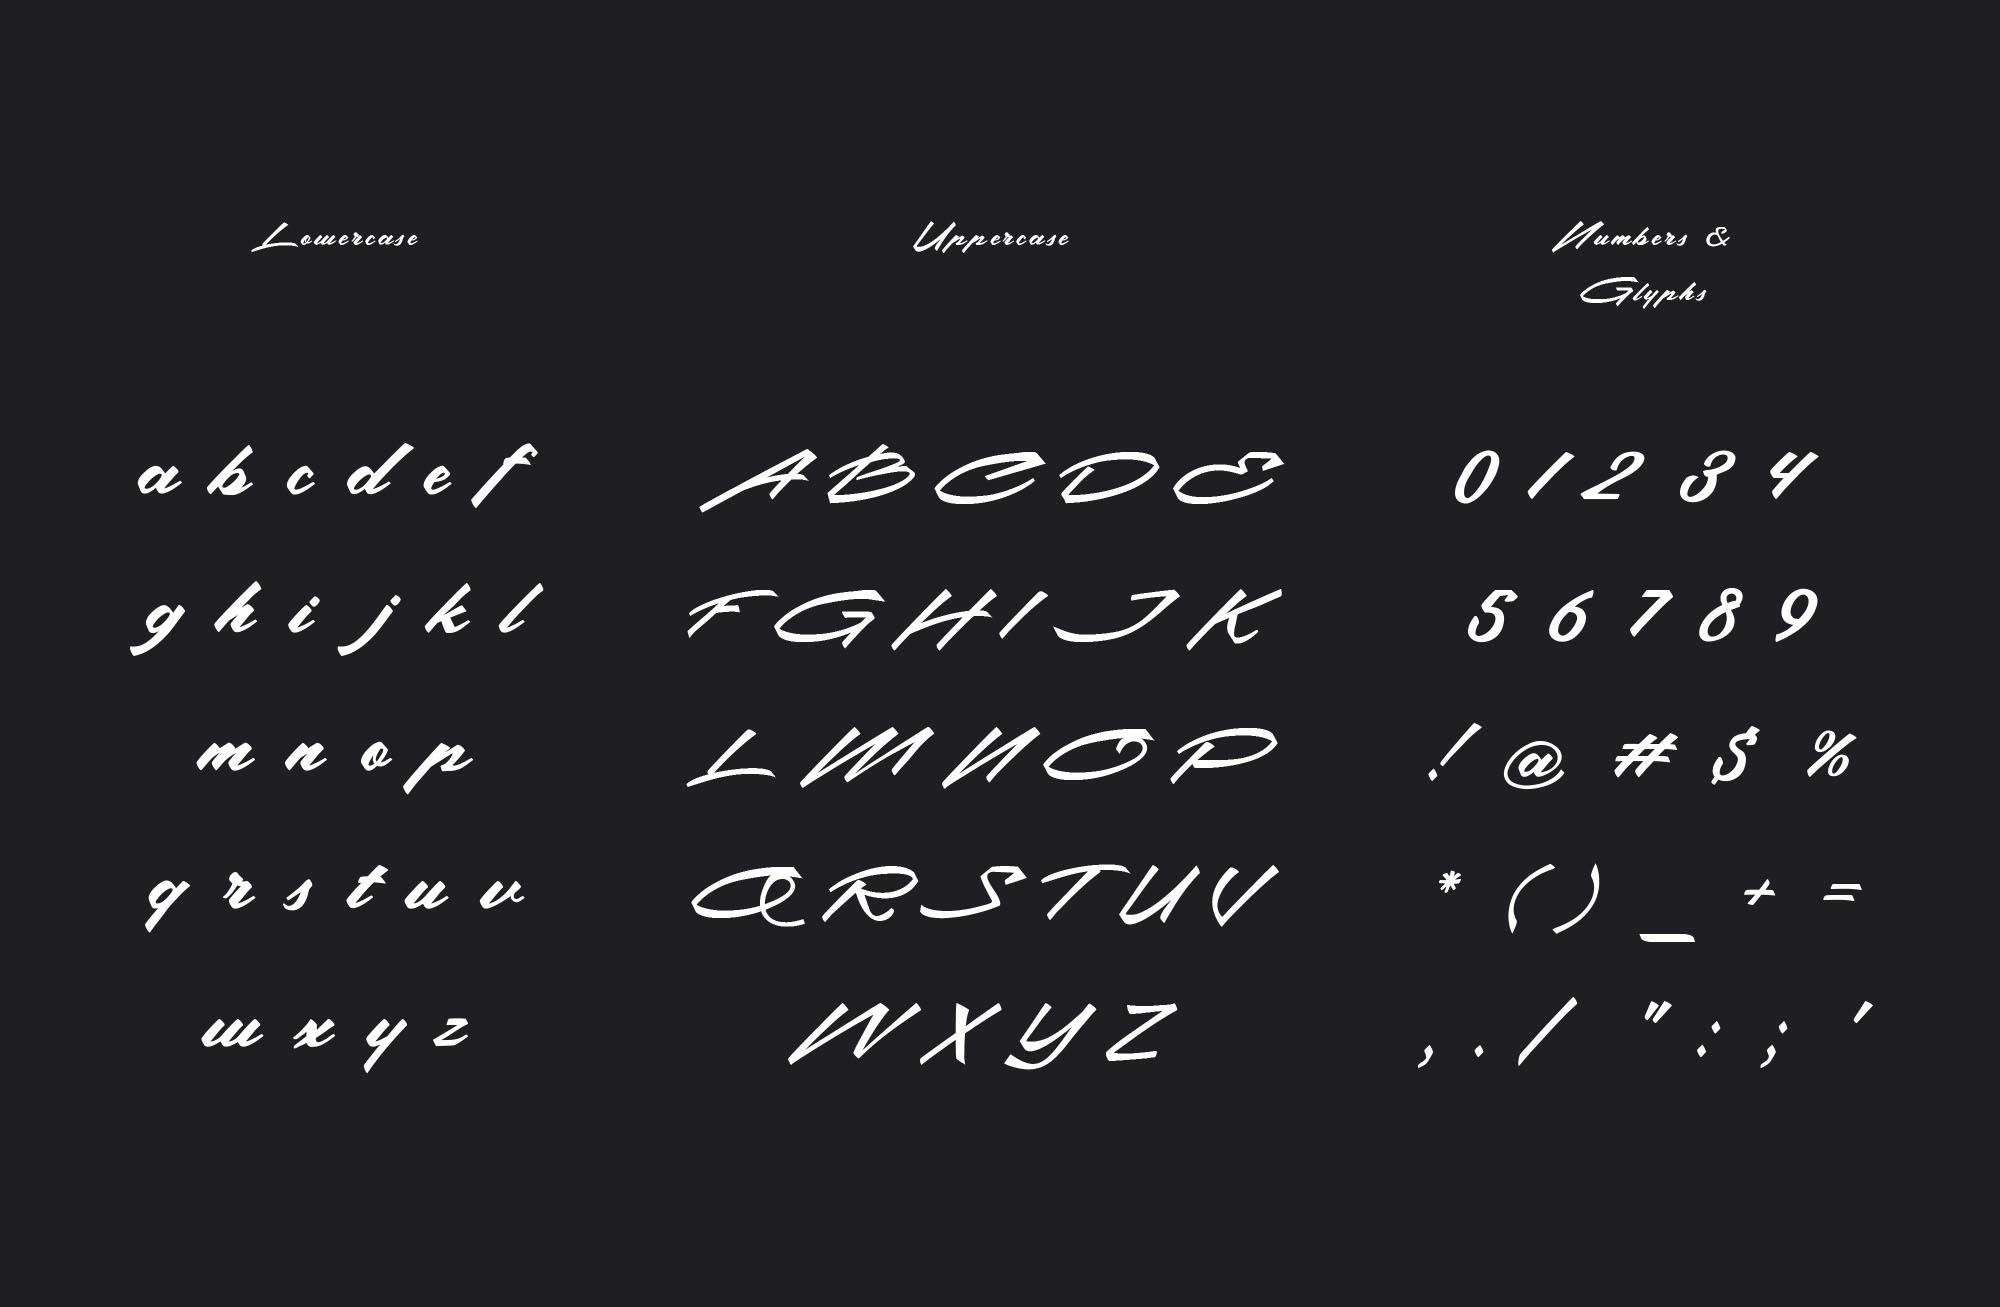 书法/手写风格英文斜体字体 Christopher Calligraphic Typeface插图(1)